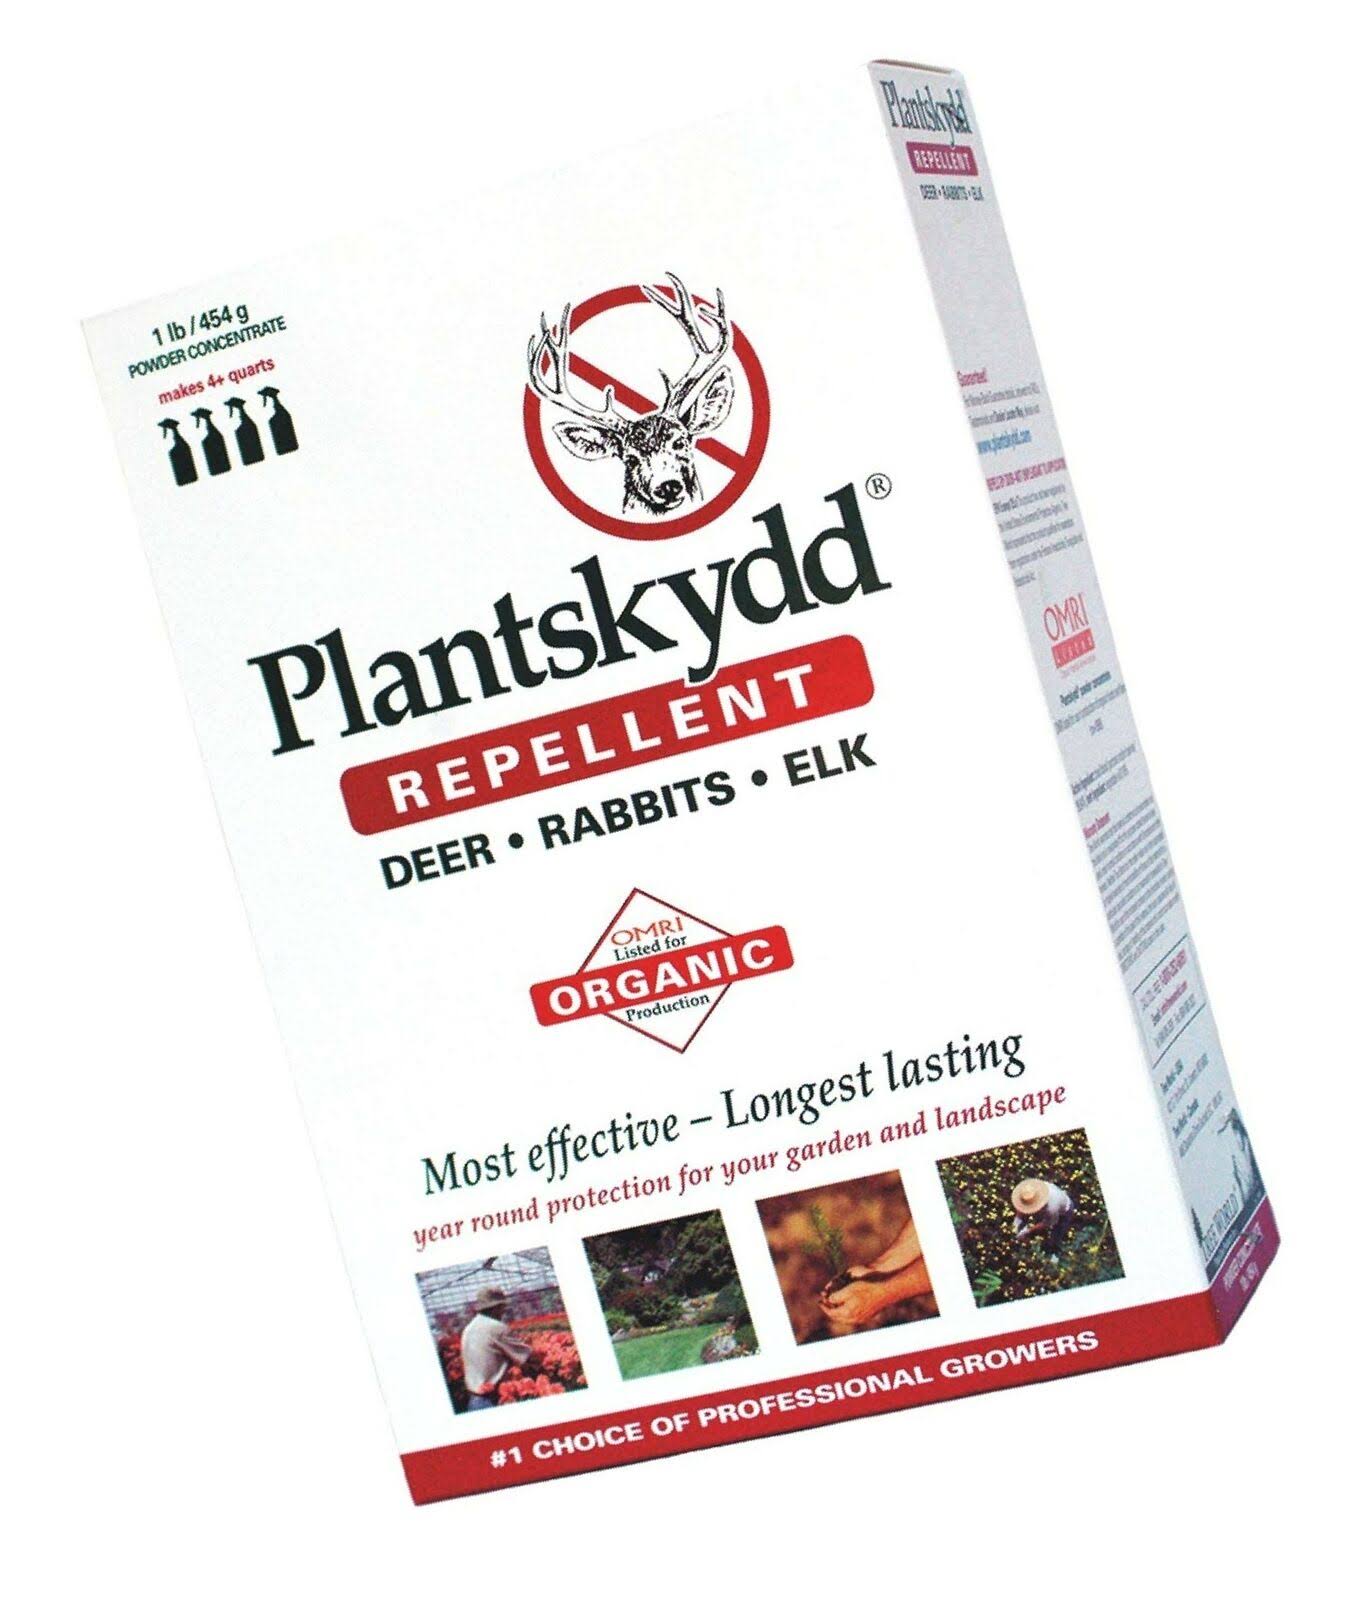 Plantskydd Deer Repellent Soluble Powder - 1lb